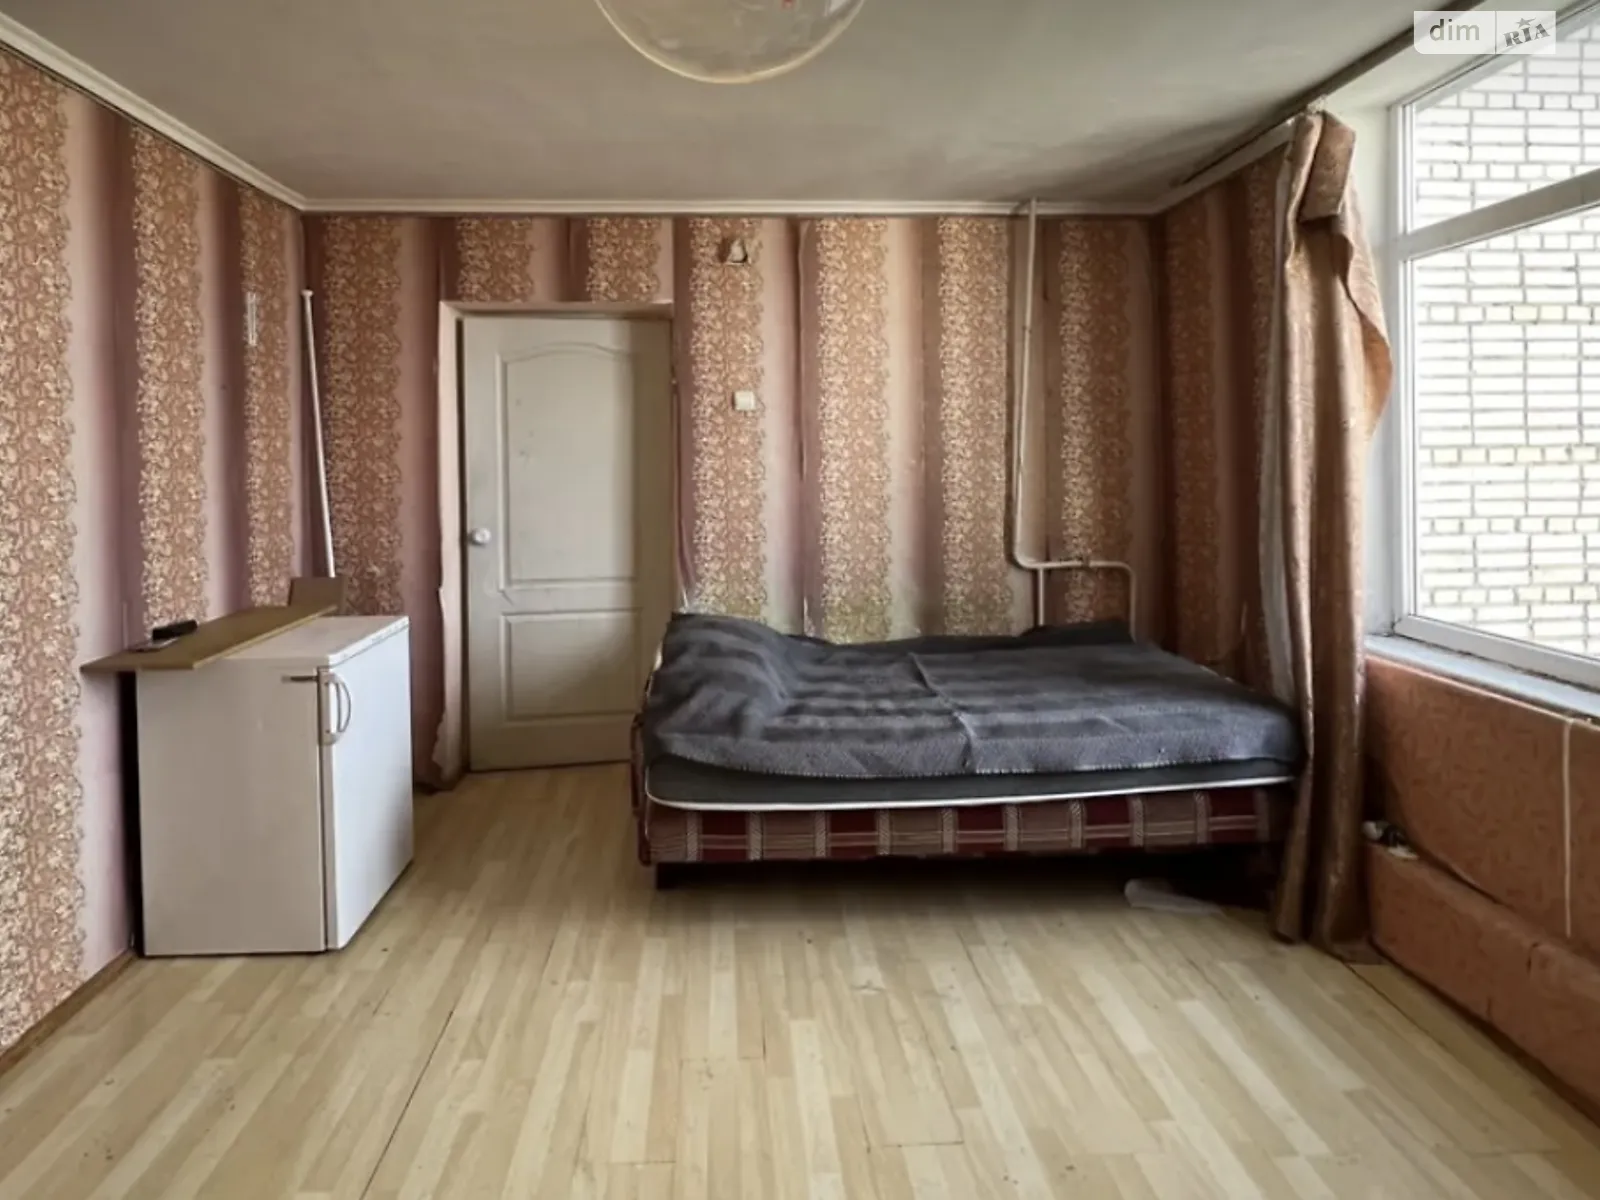 Продается комната 21 кв. м в Виннице, цена: 16500 $ - фото 1